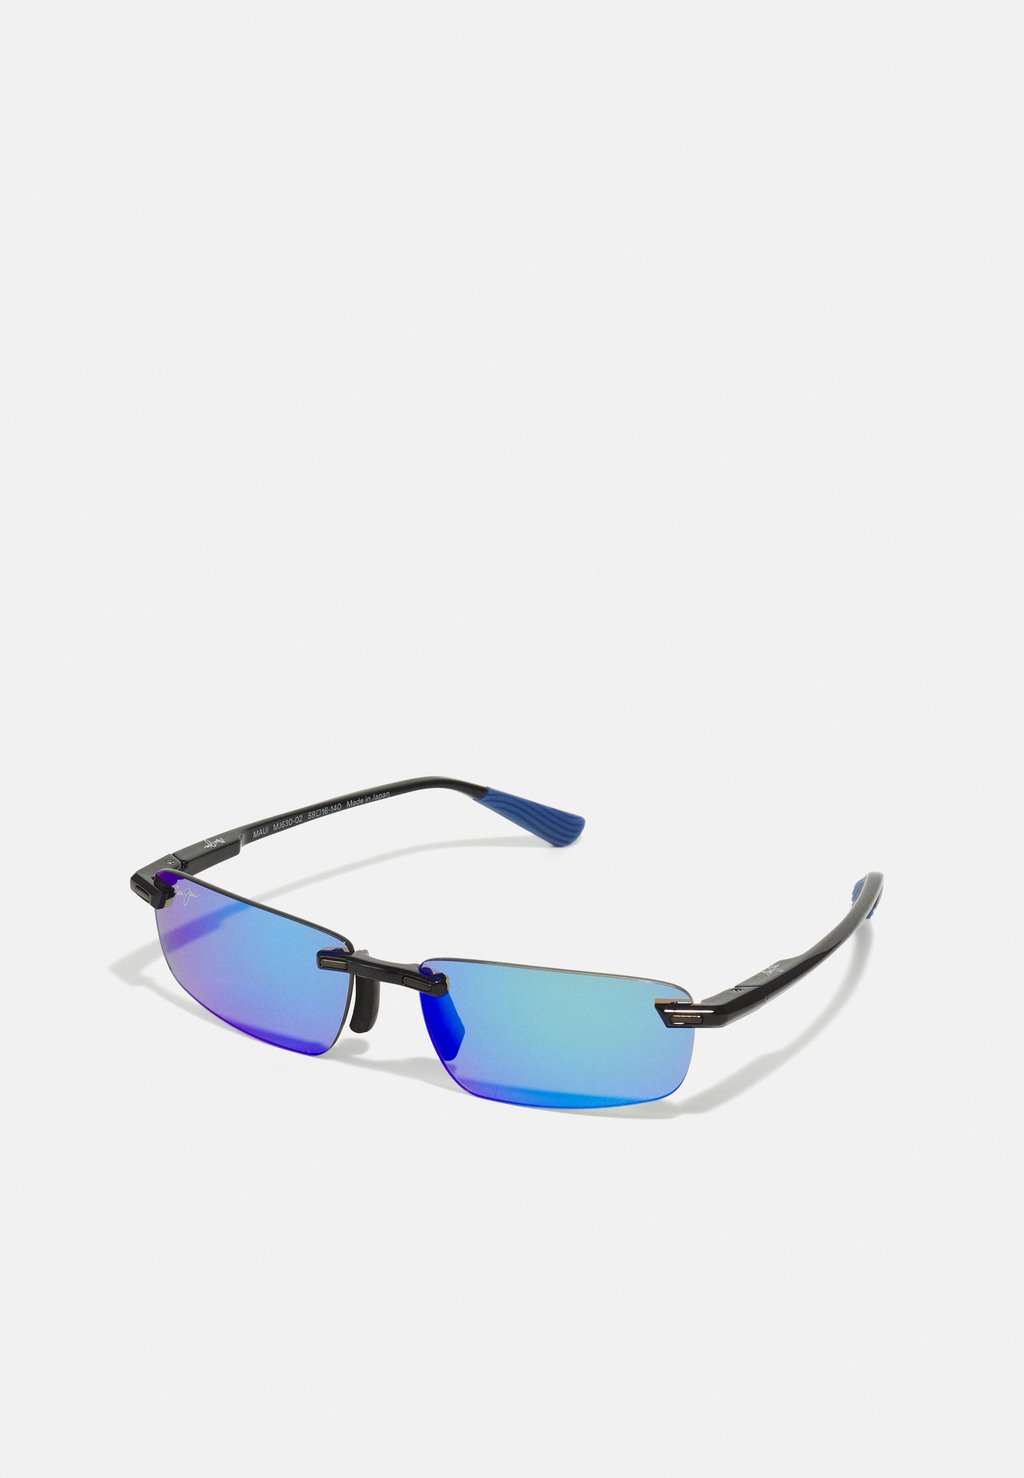 Солнцезащитные очки Maui Jim, цвет black/blue солнцезащитные очки kou maui jim цвет navy blue blue hawaii